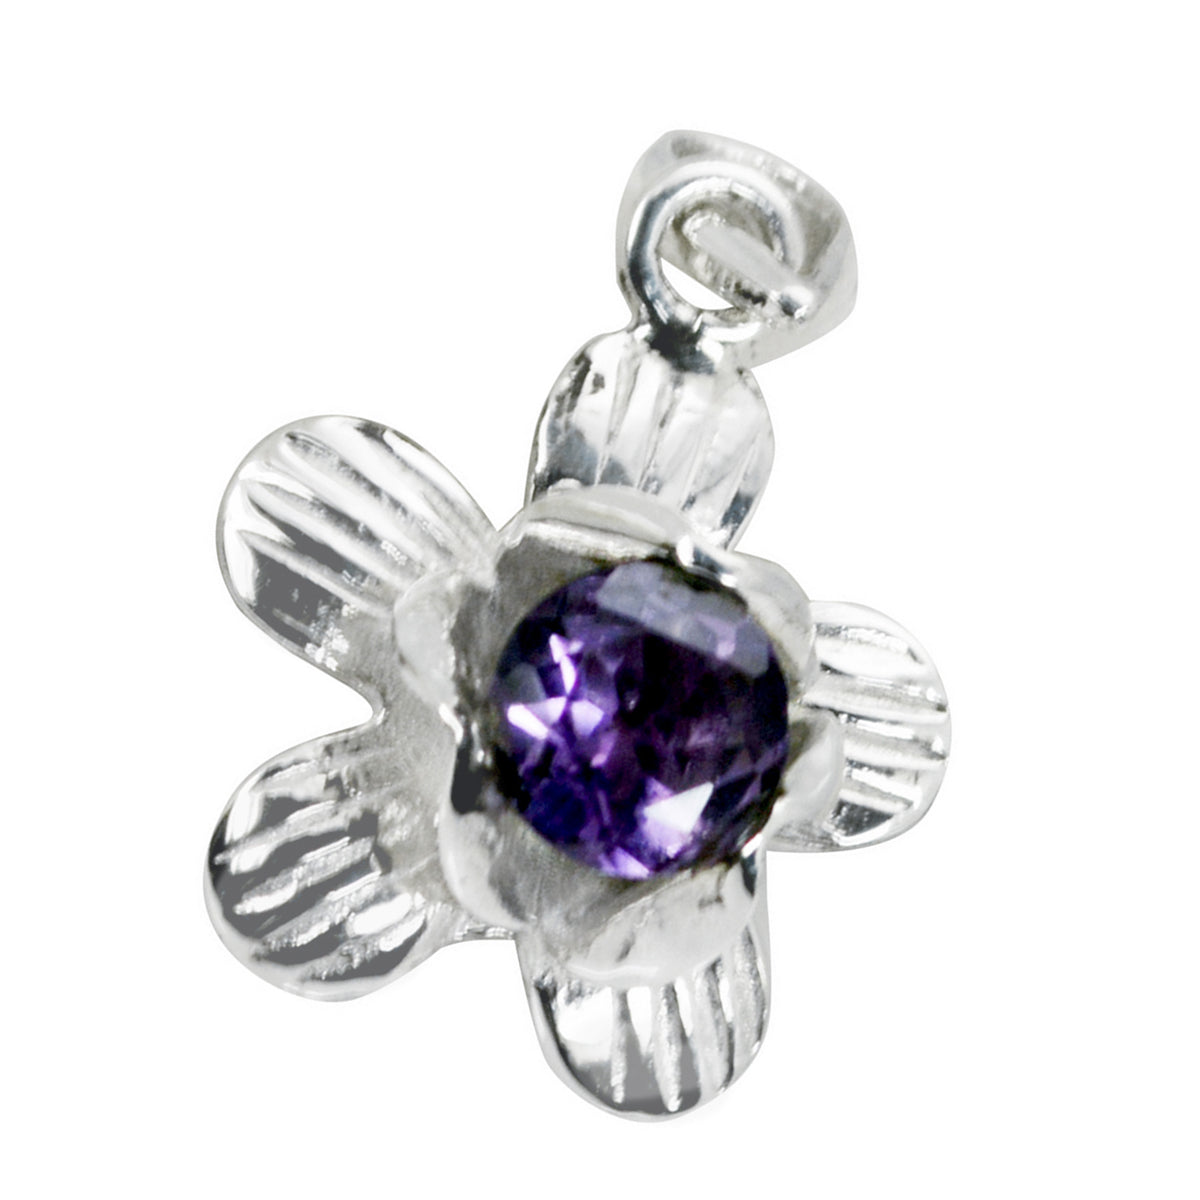 Riyo Ravishing Gemstone Round Faceted Purple Amethyst Sterling Silver Pendant Gift For Friend